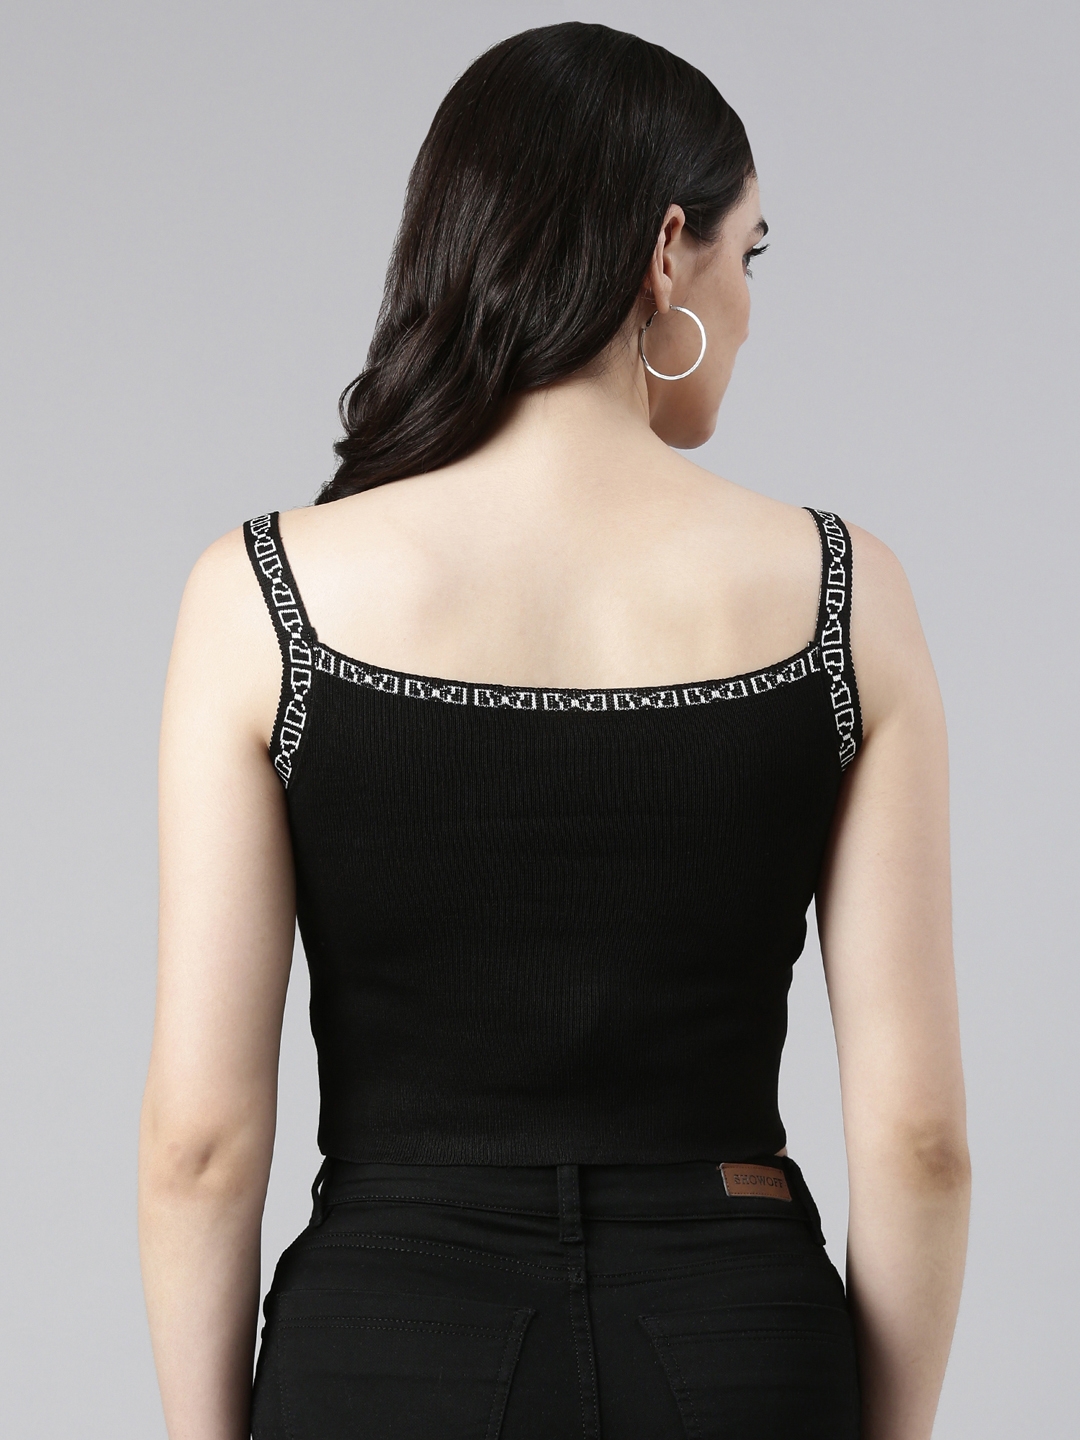 Showoff | SHOWOFF Women's Shoulder Straps Solid Sleeveless Black Crop Tank Top 4